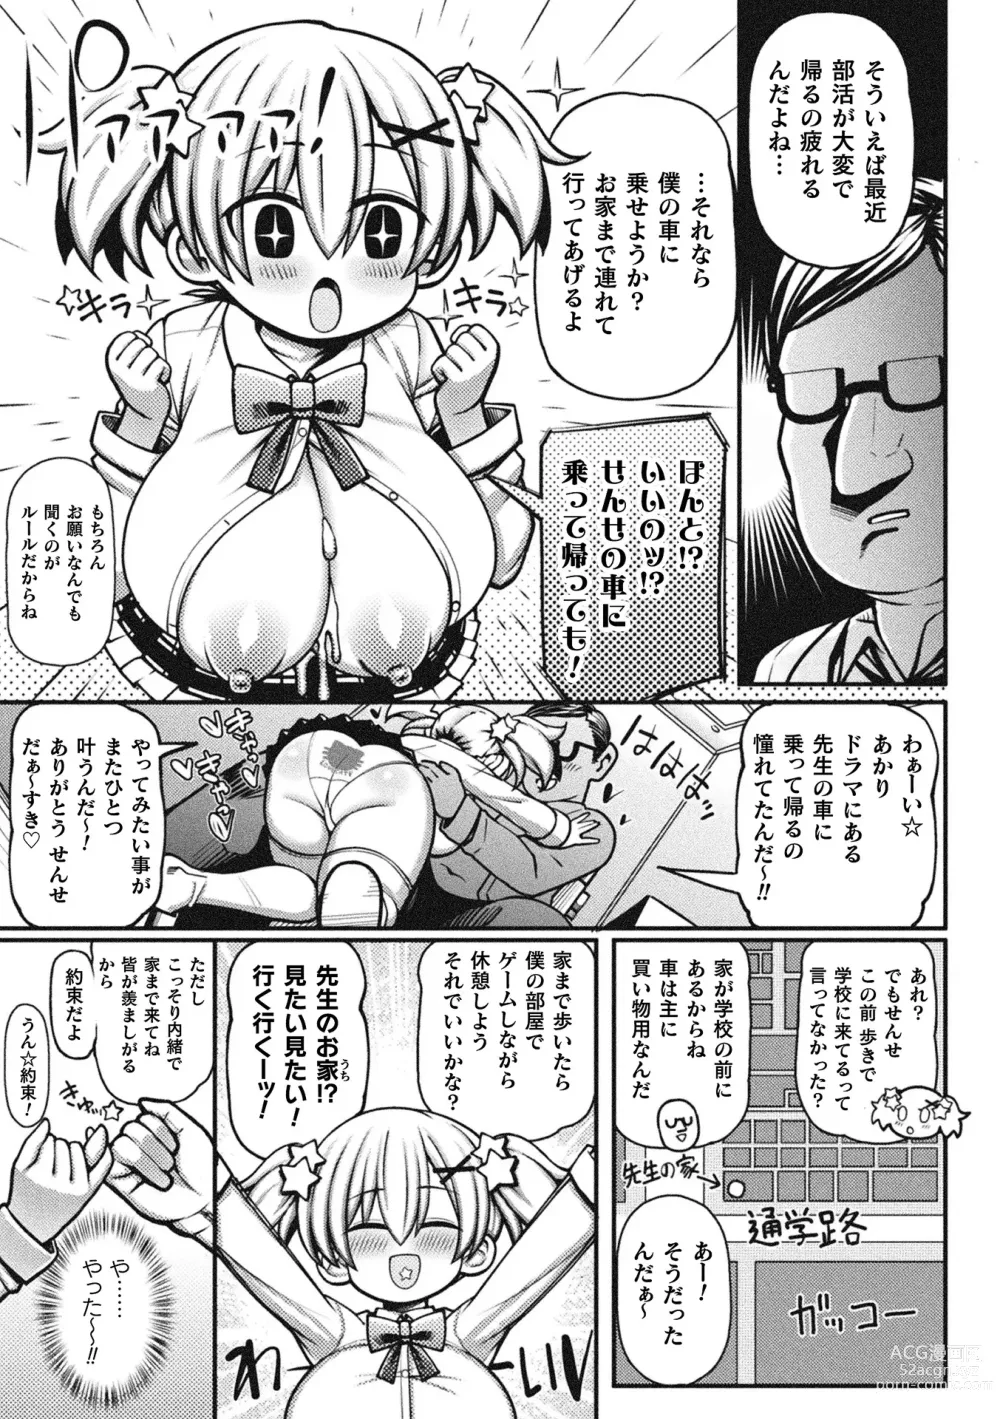 Page 13 of manga Mesugaki Wakara se Game! Episode 1